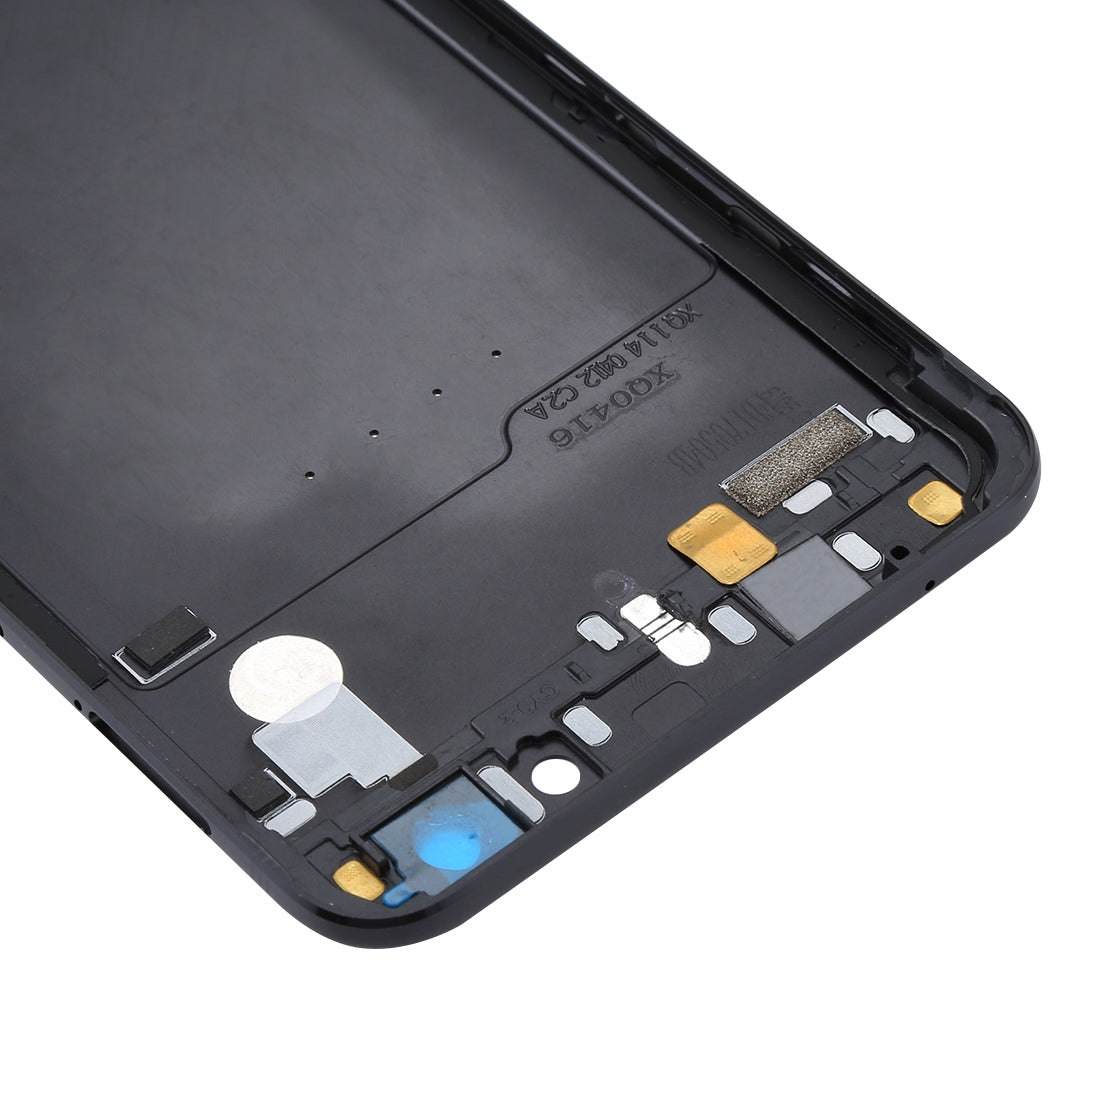 Tapa Bateria Back Cover Oppo R9s Plus / F3 Plus Negro